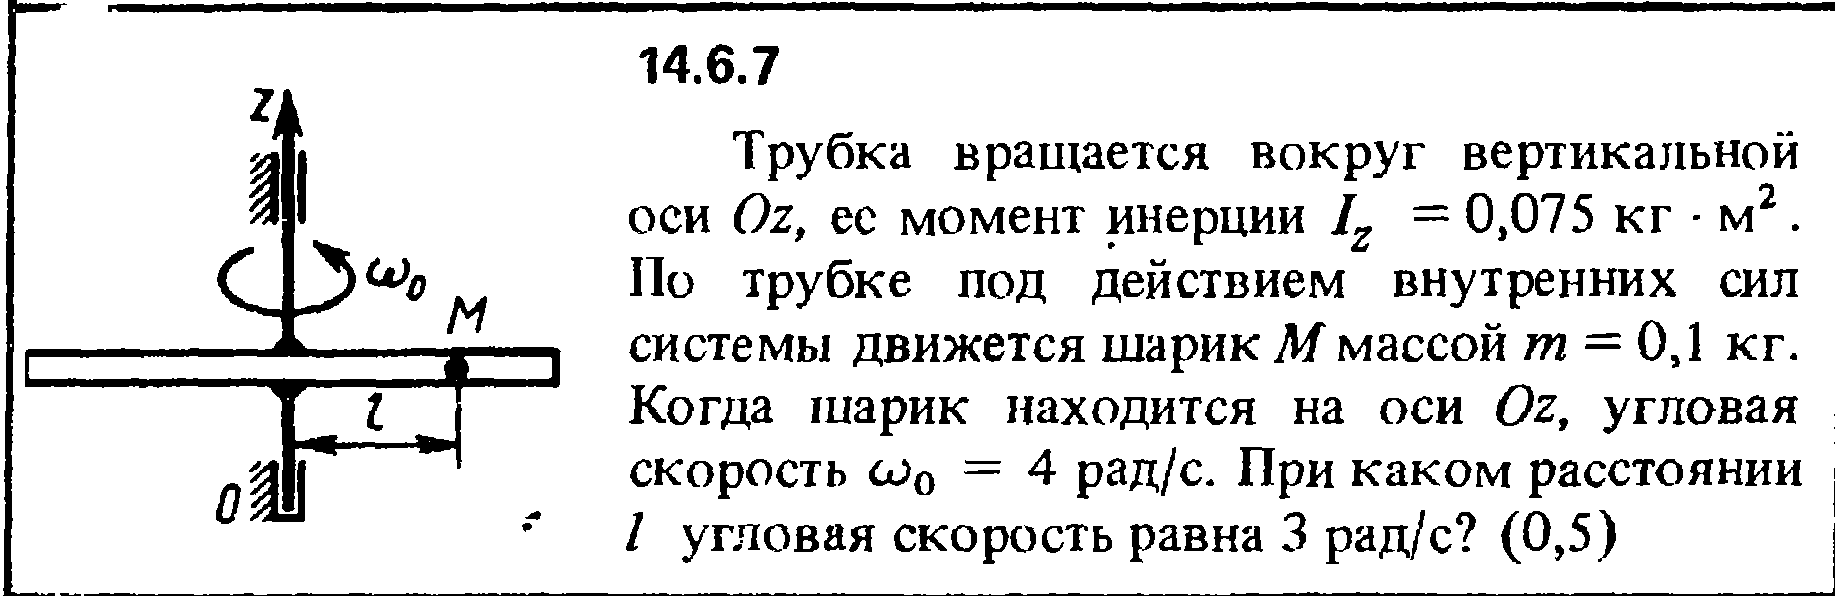 Решение задачи 14.6.7 из сборника Кепе О.Е. 1989 года